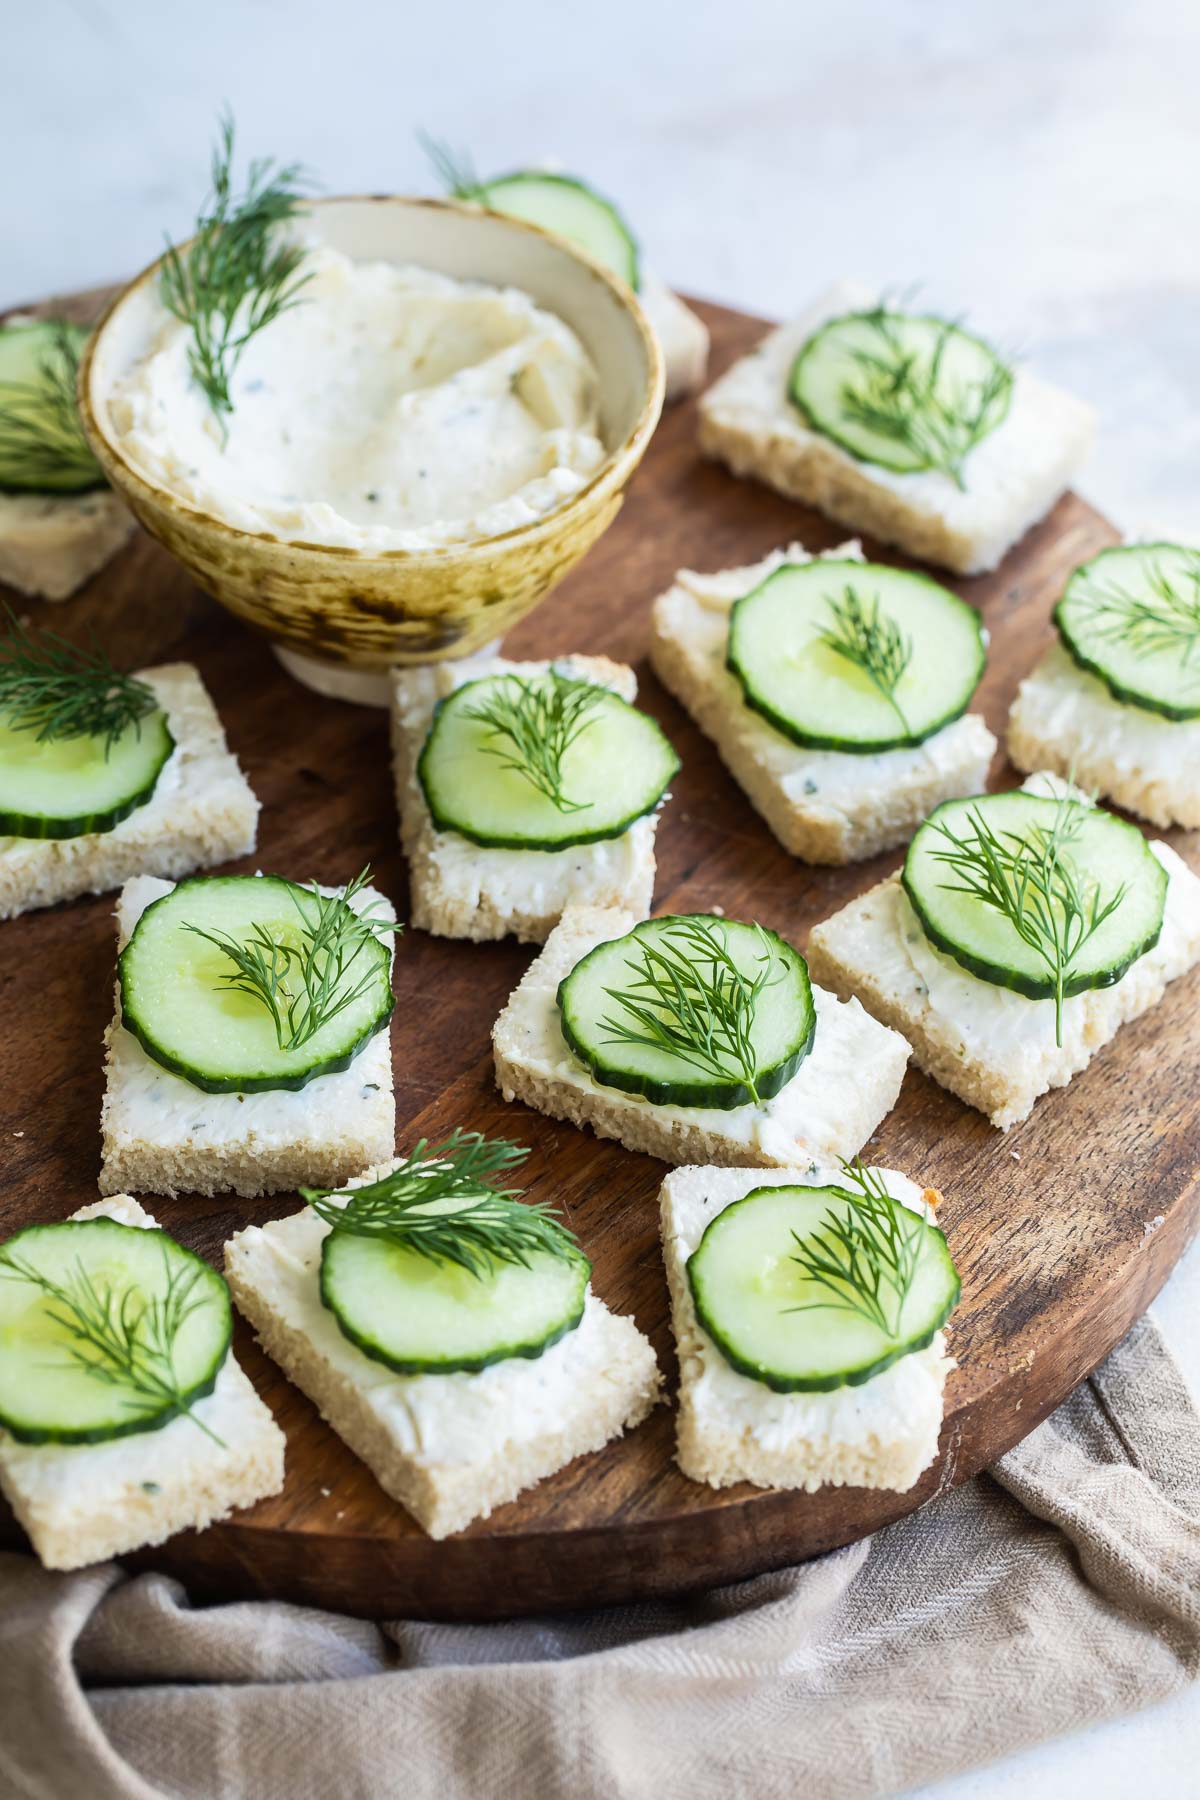 Cucumber sandwiches on a round wooden platter.